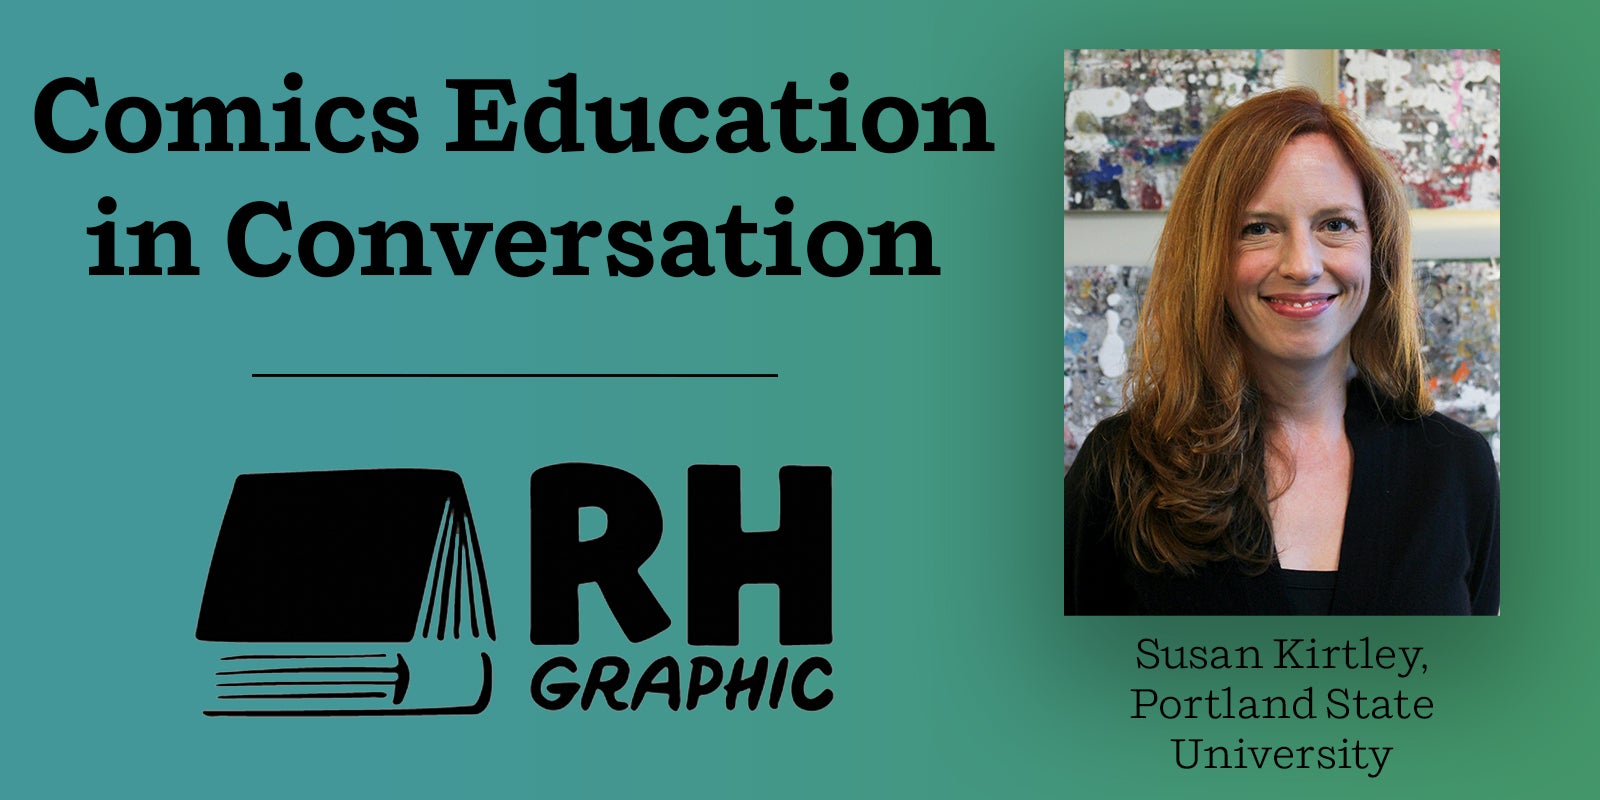 Comics Education in Conversation: Susan Kirtley